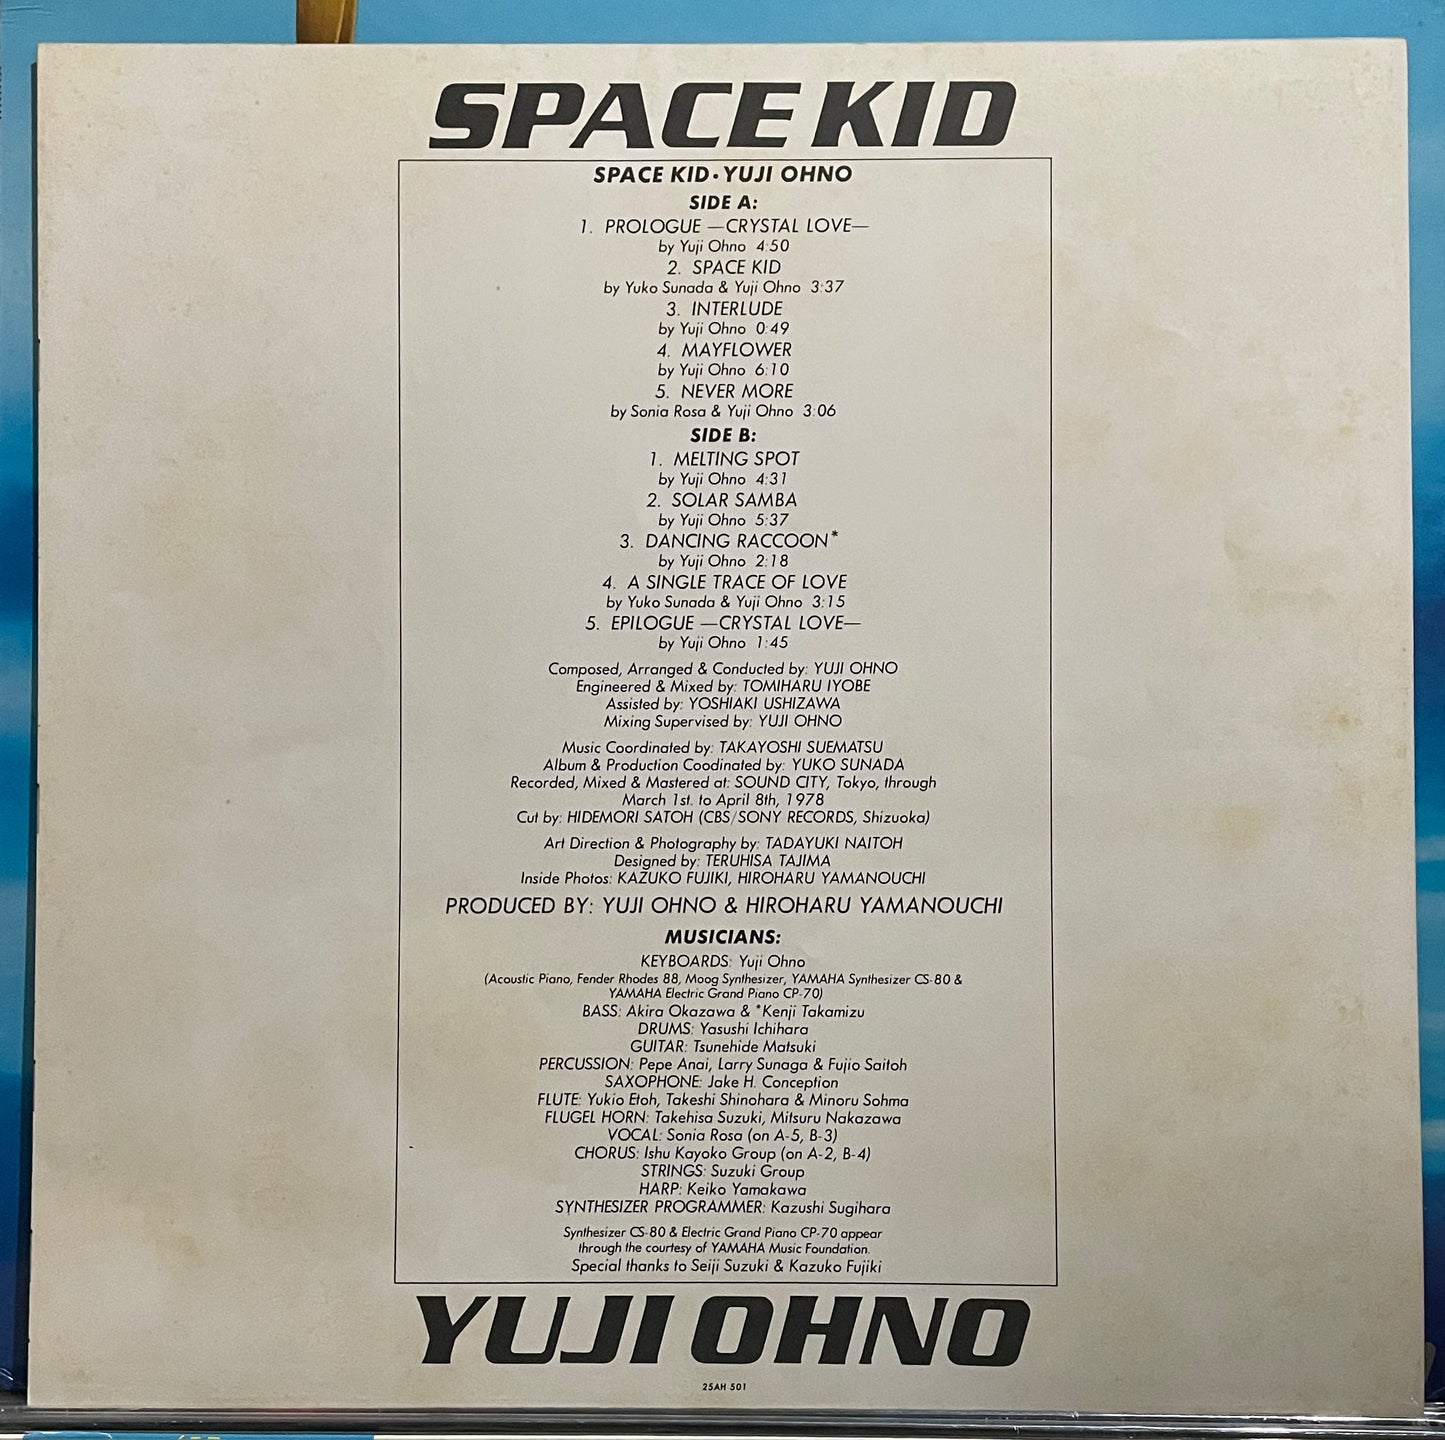 Yuji Ohno “Space Kid” (1978)